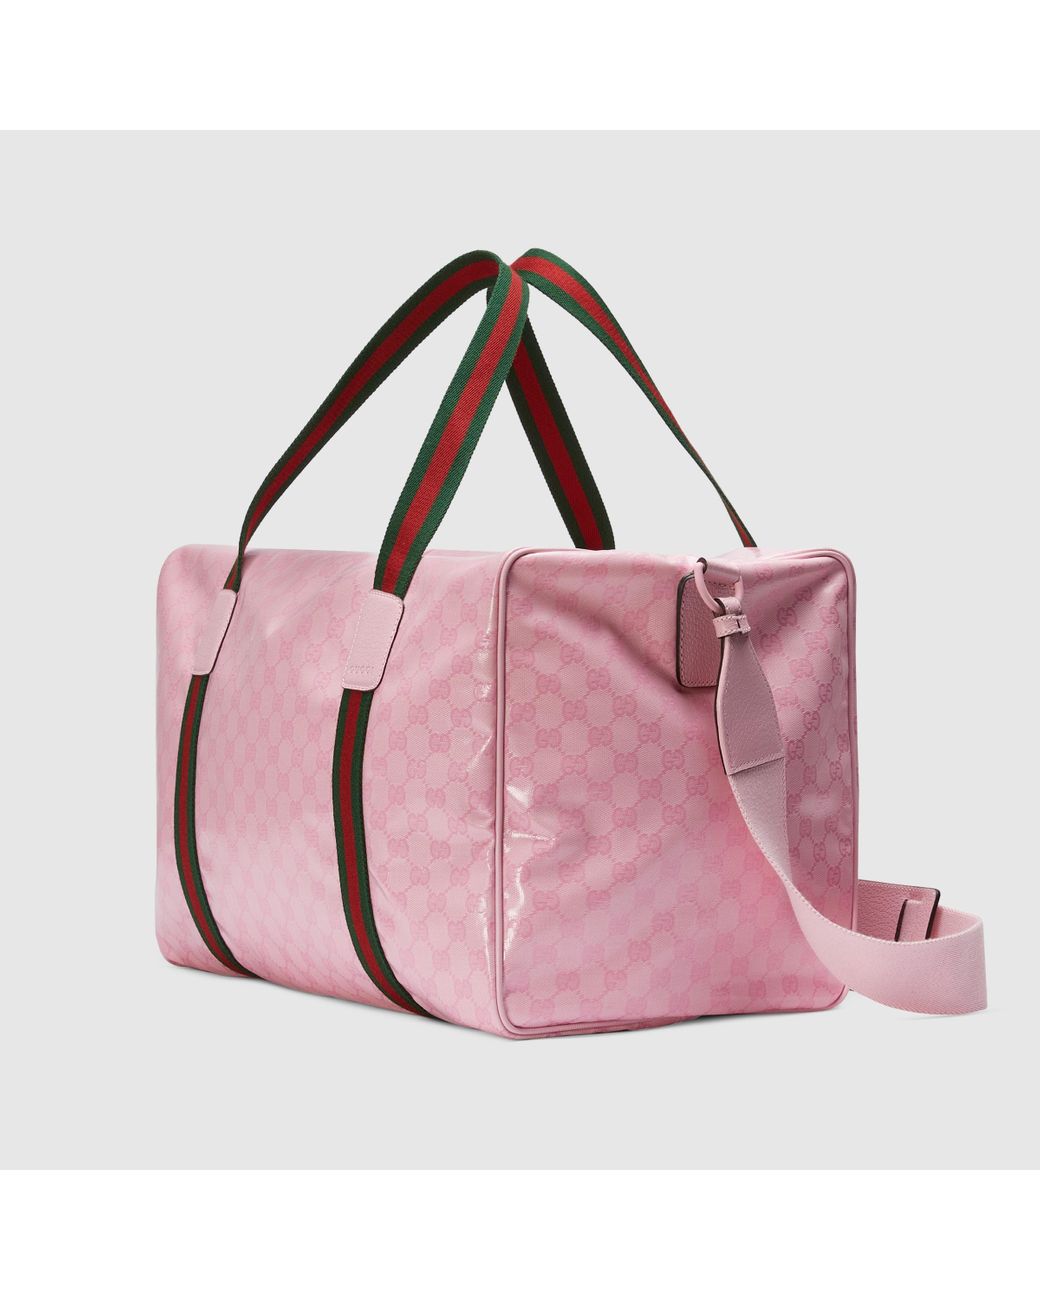 GUCCI - GG Black carry-on duffle bag (Louis Vuitton Keepall alternative) -  YouTube